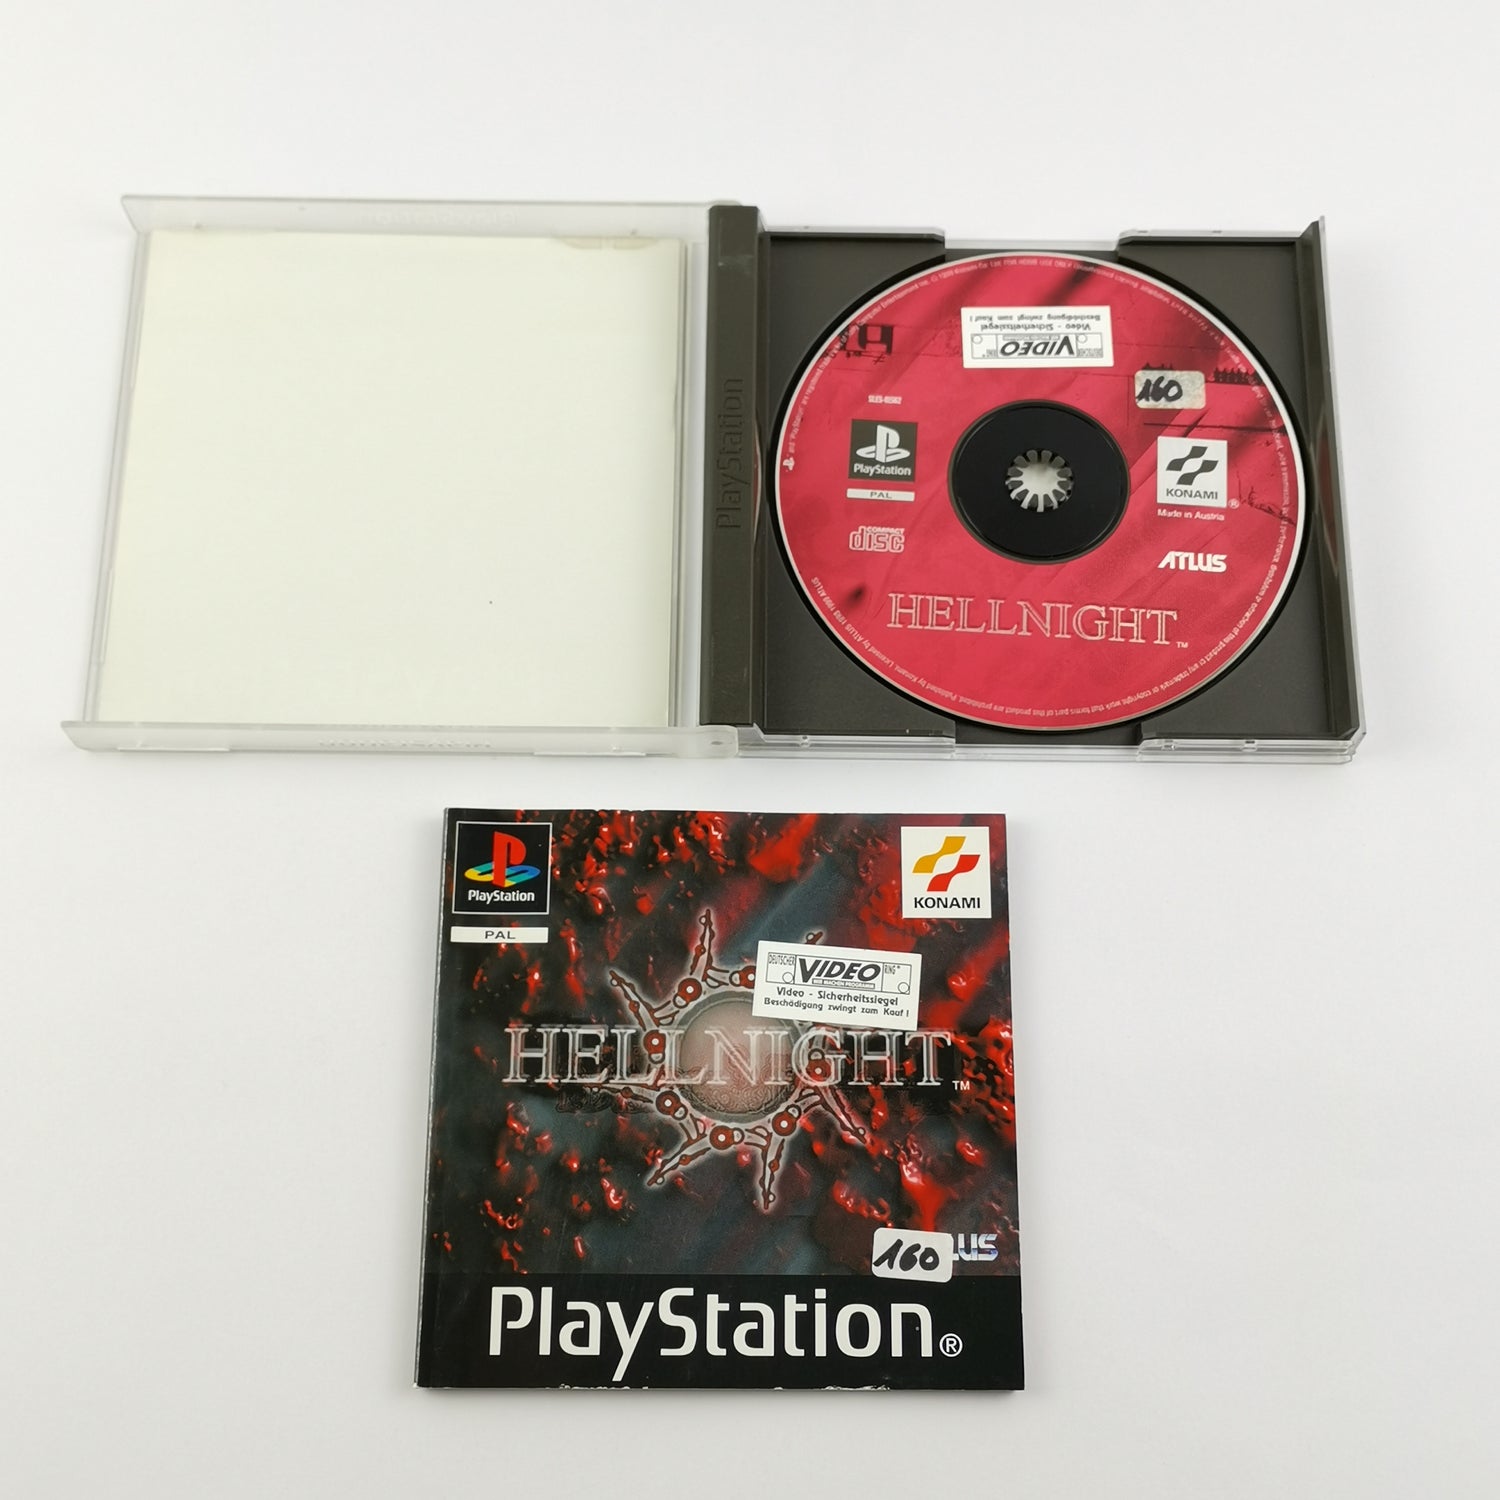 Sony Playstation 1 Game: Hellnight - Original Packaging & Instructions | PAL PS1 PSX Konami